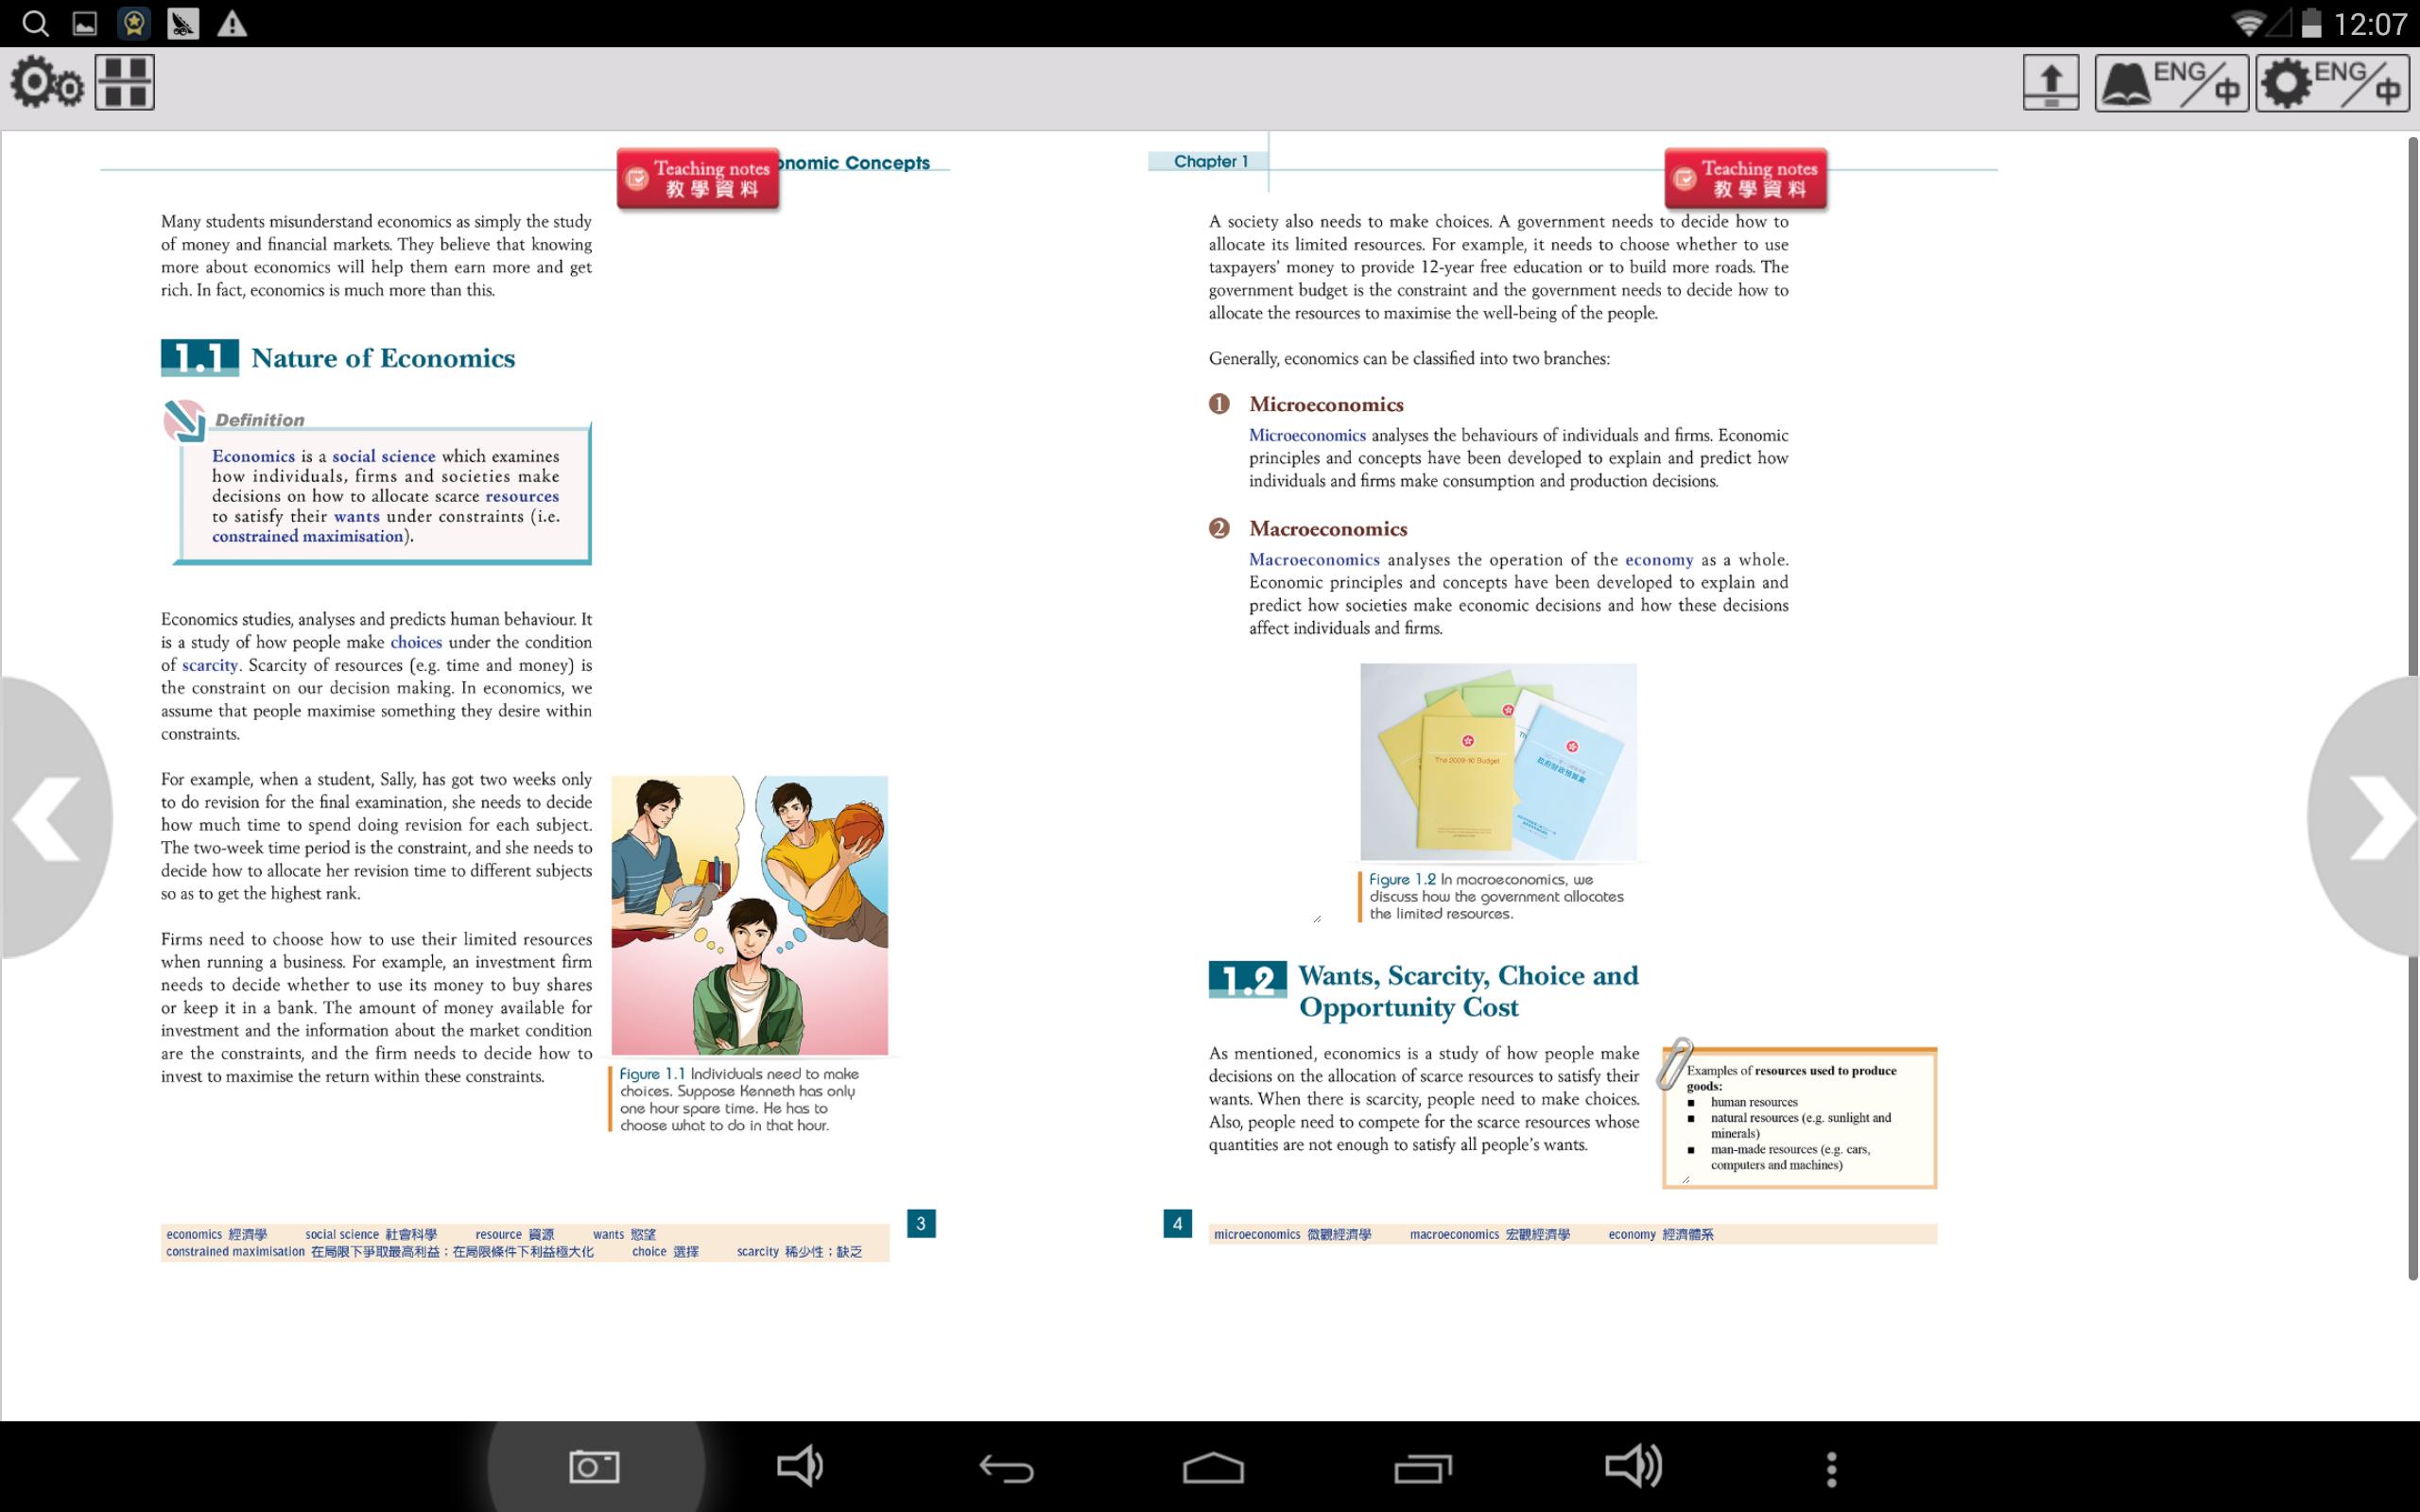 Aristo Econ E Bookshelf 1 0 For Android Apk Download